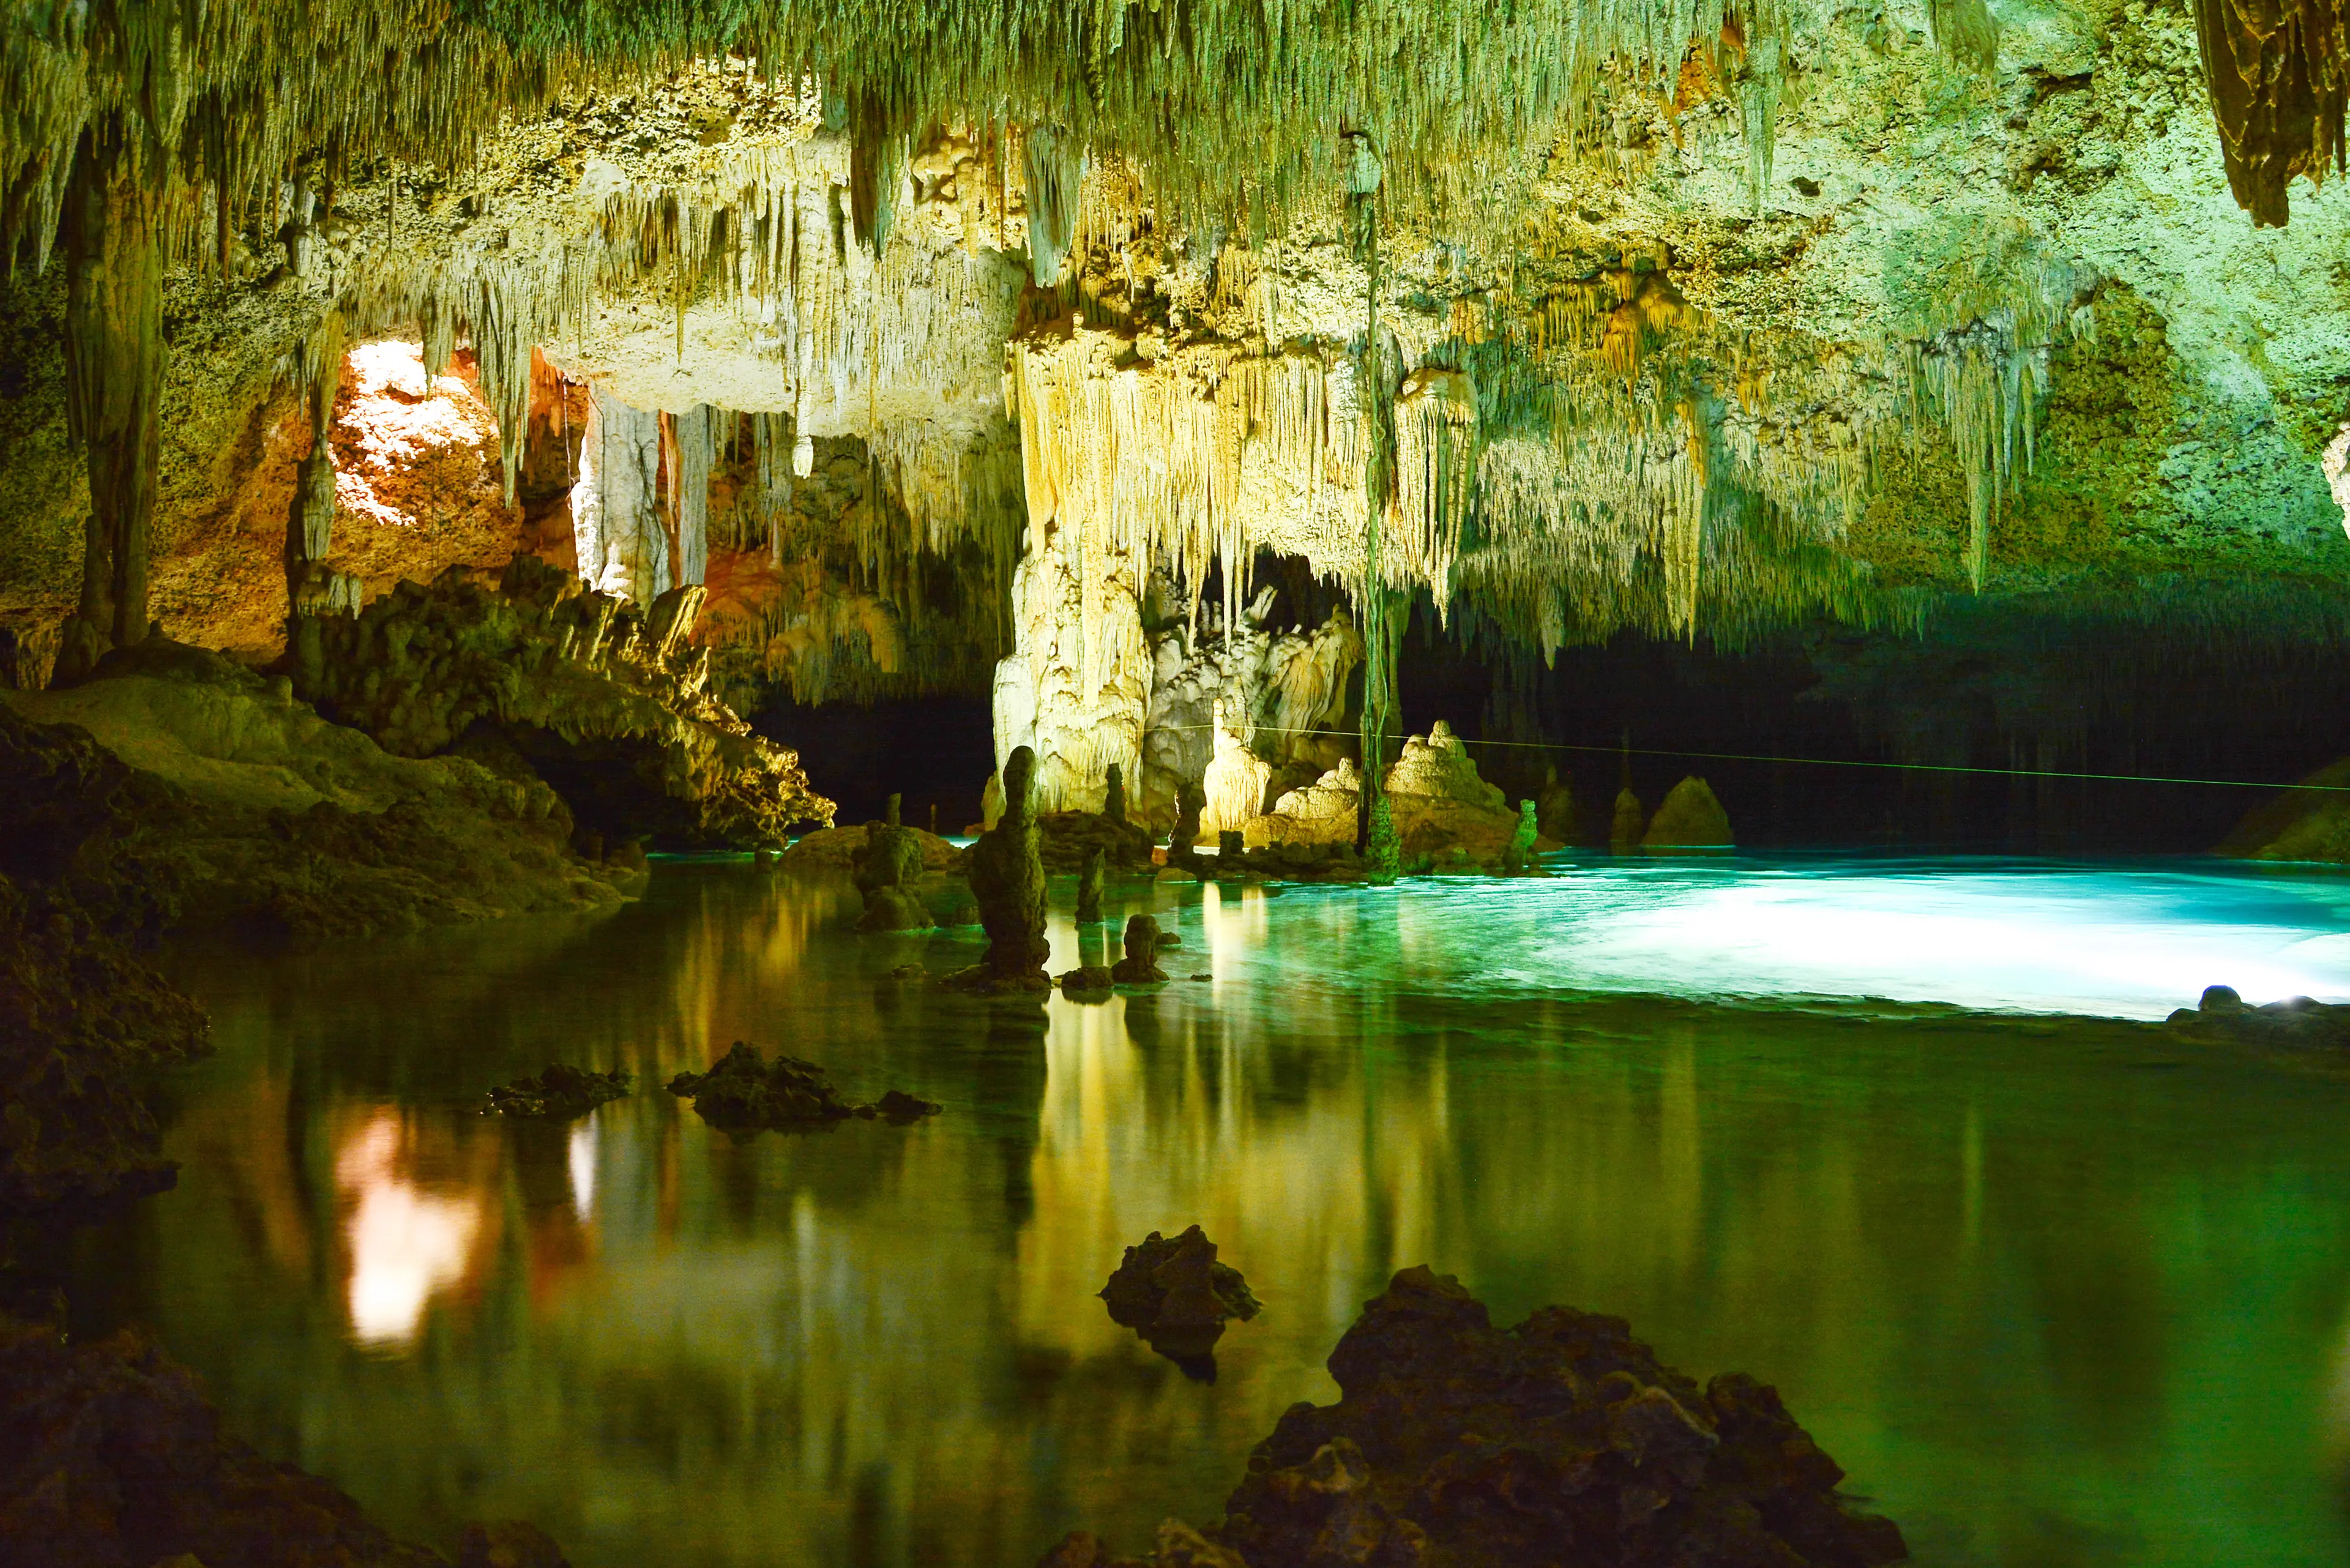 The interior of the Rio Frio caves